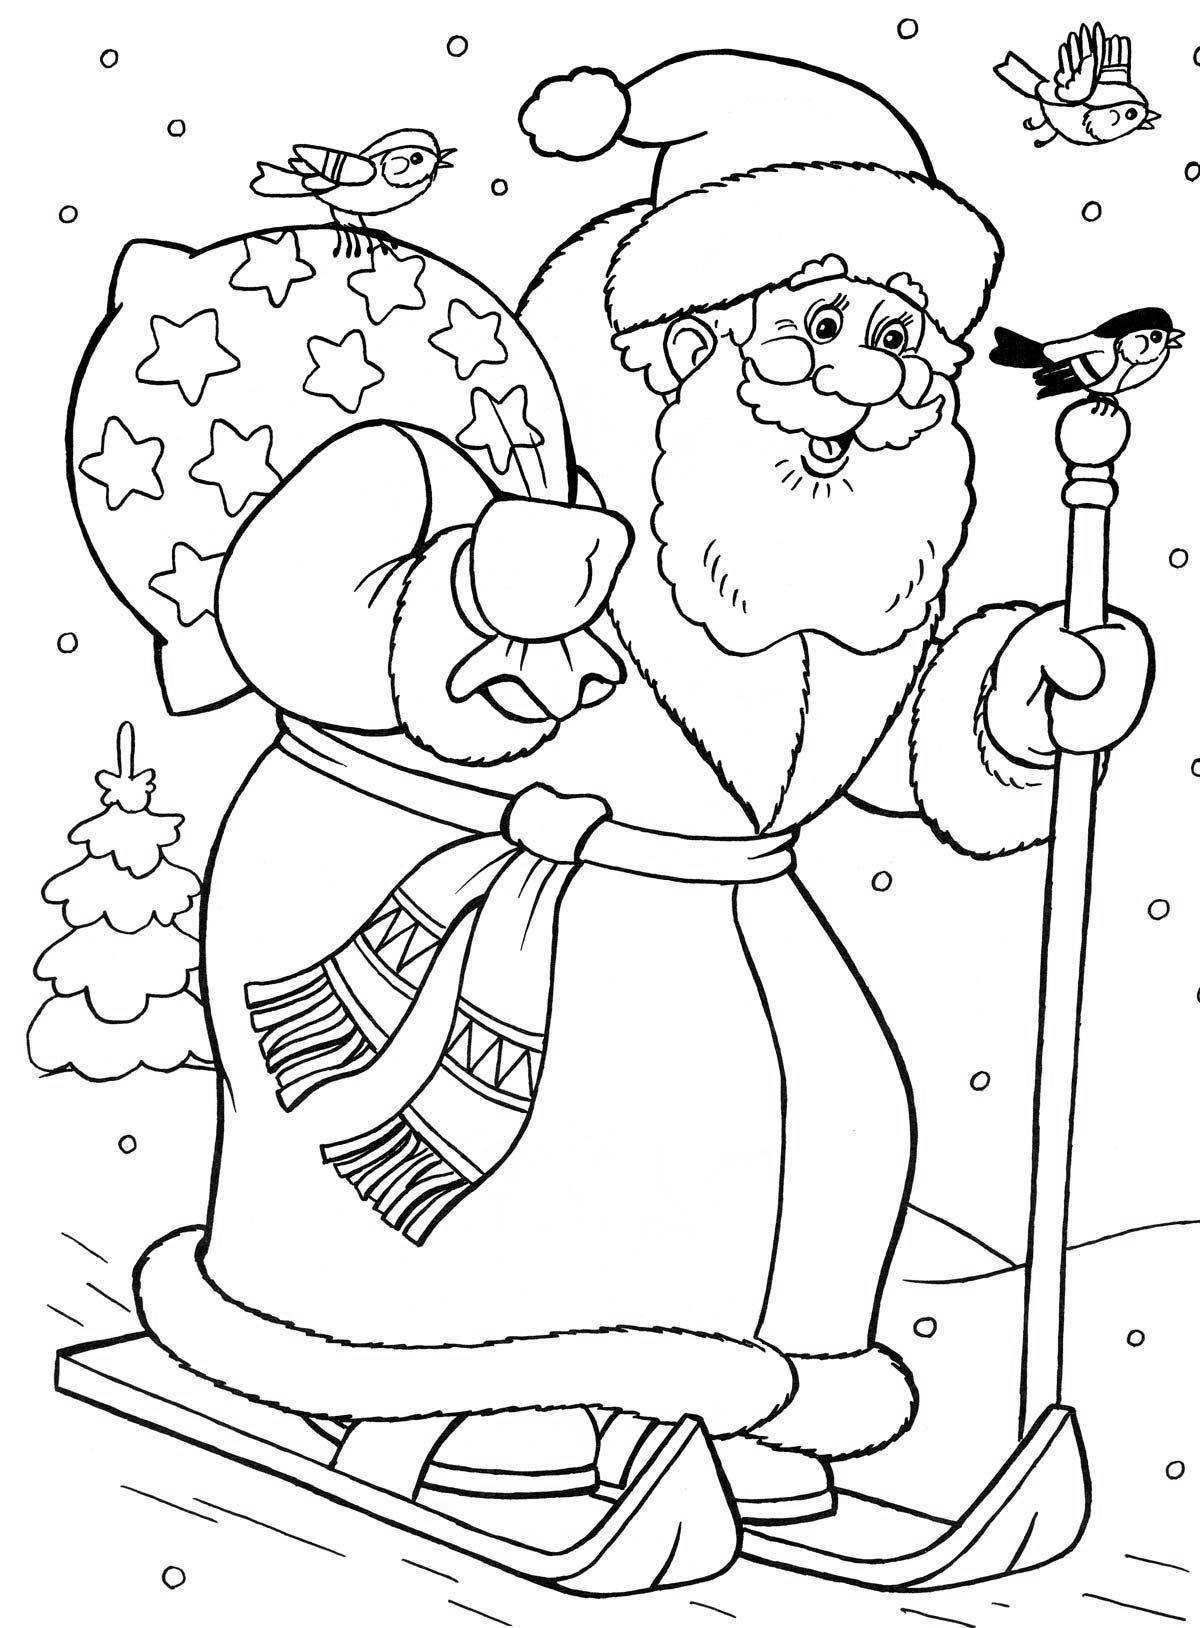 Funny santa claus coloring page